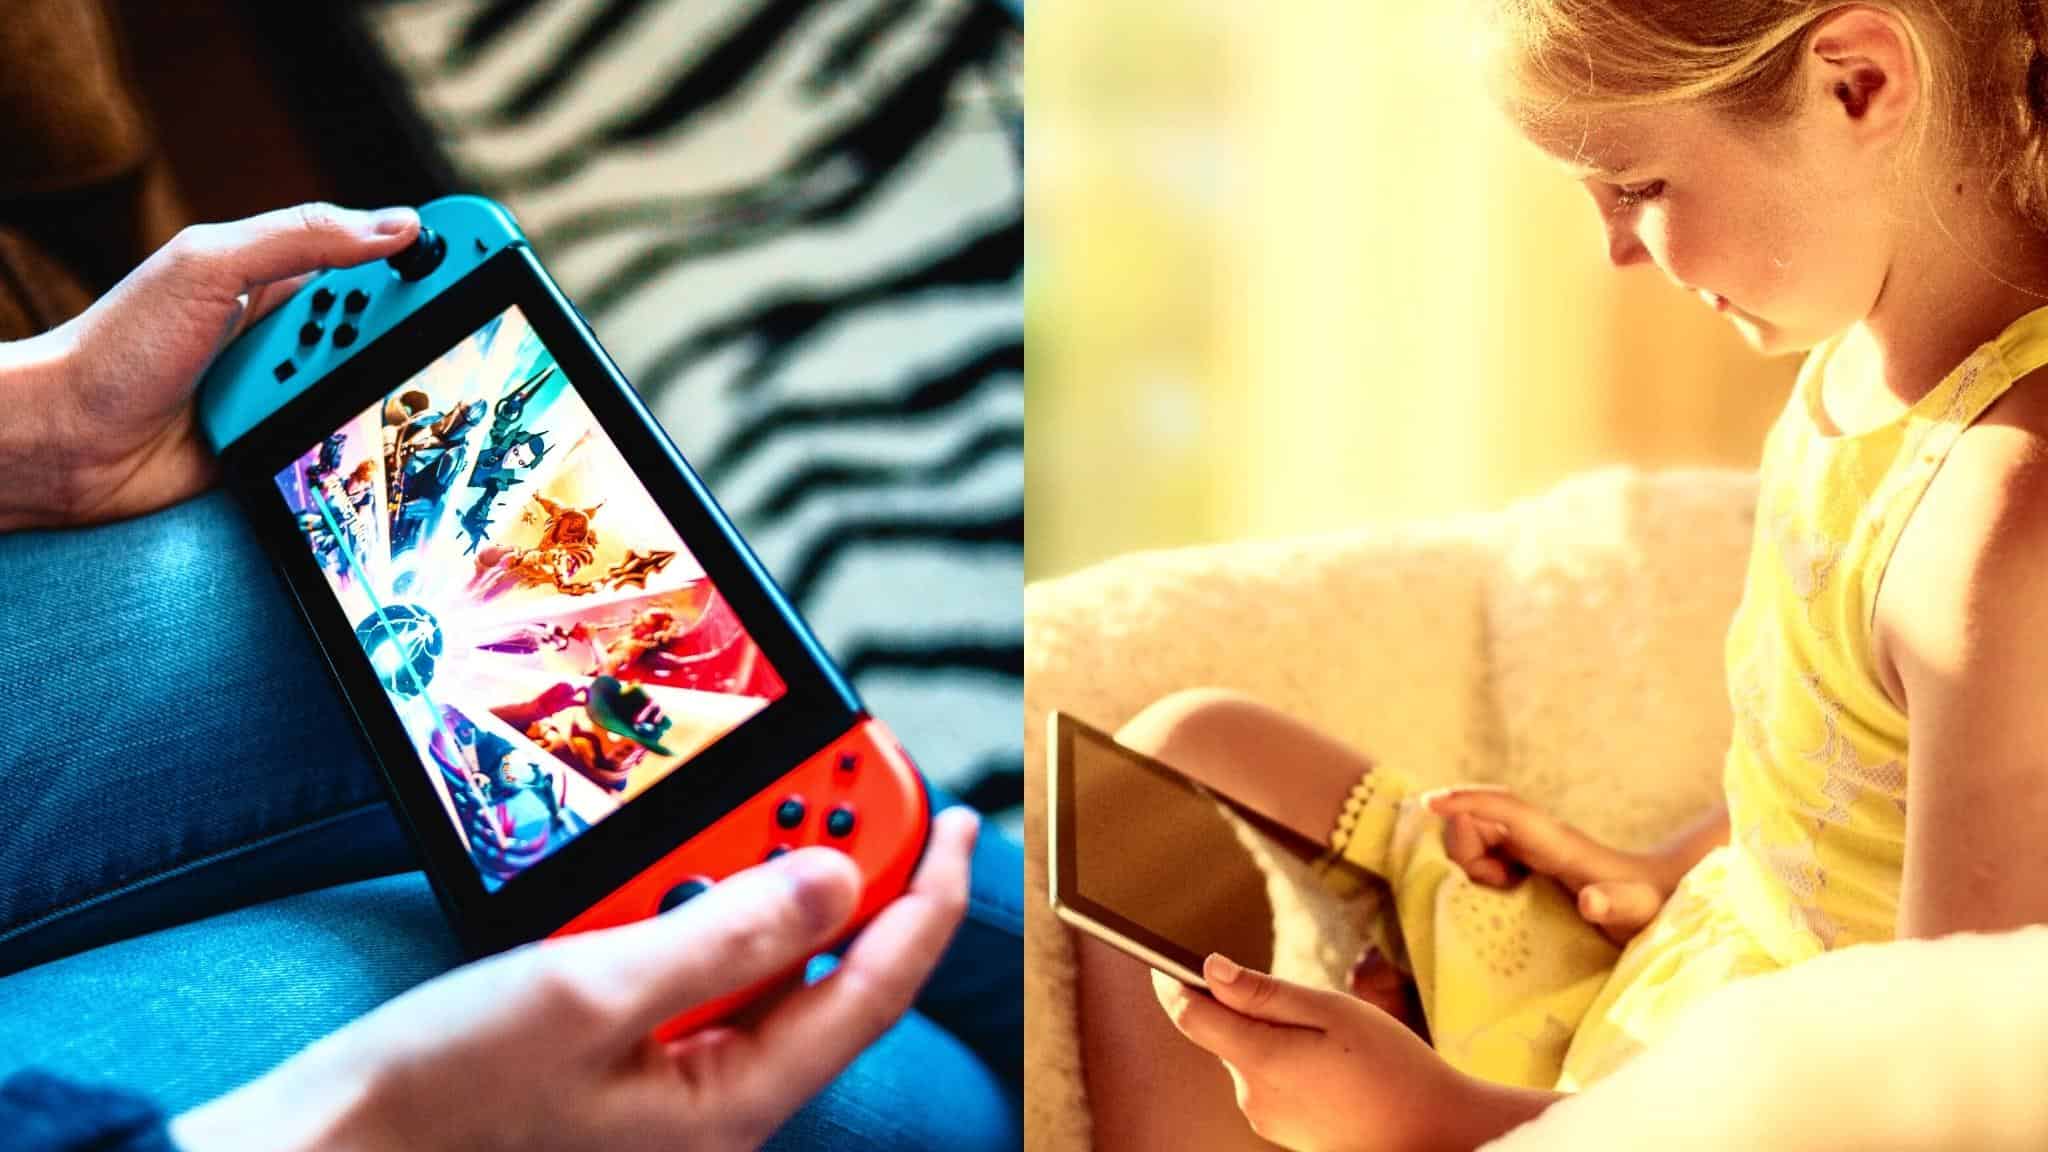 ¿Nintendo Switch o tableta para niños? 3 consejos para ayudar a elegir